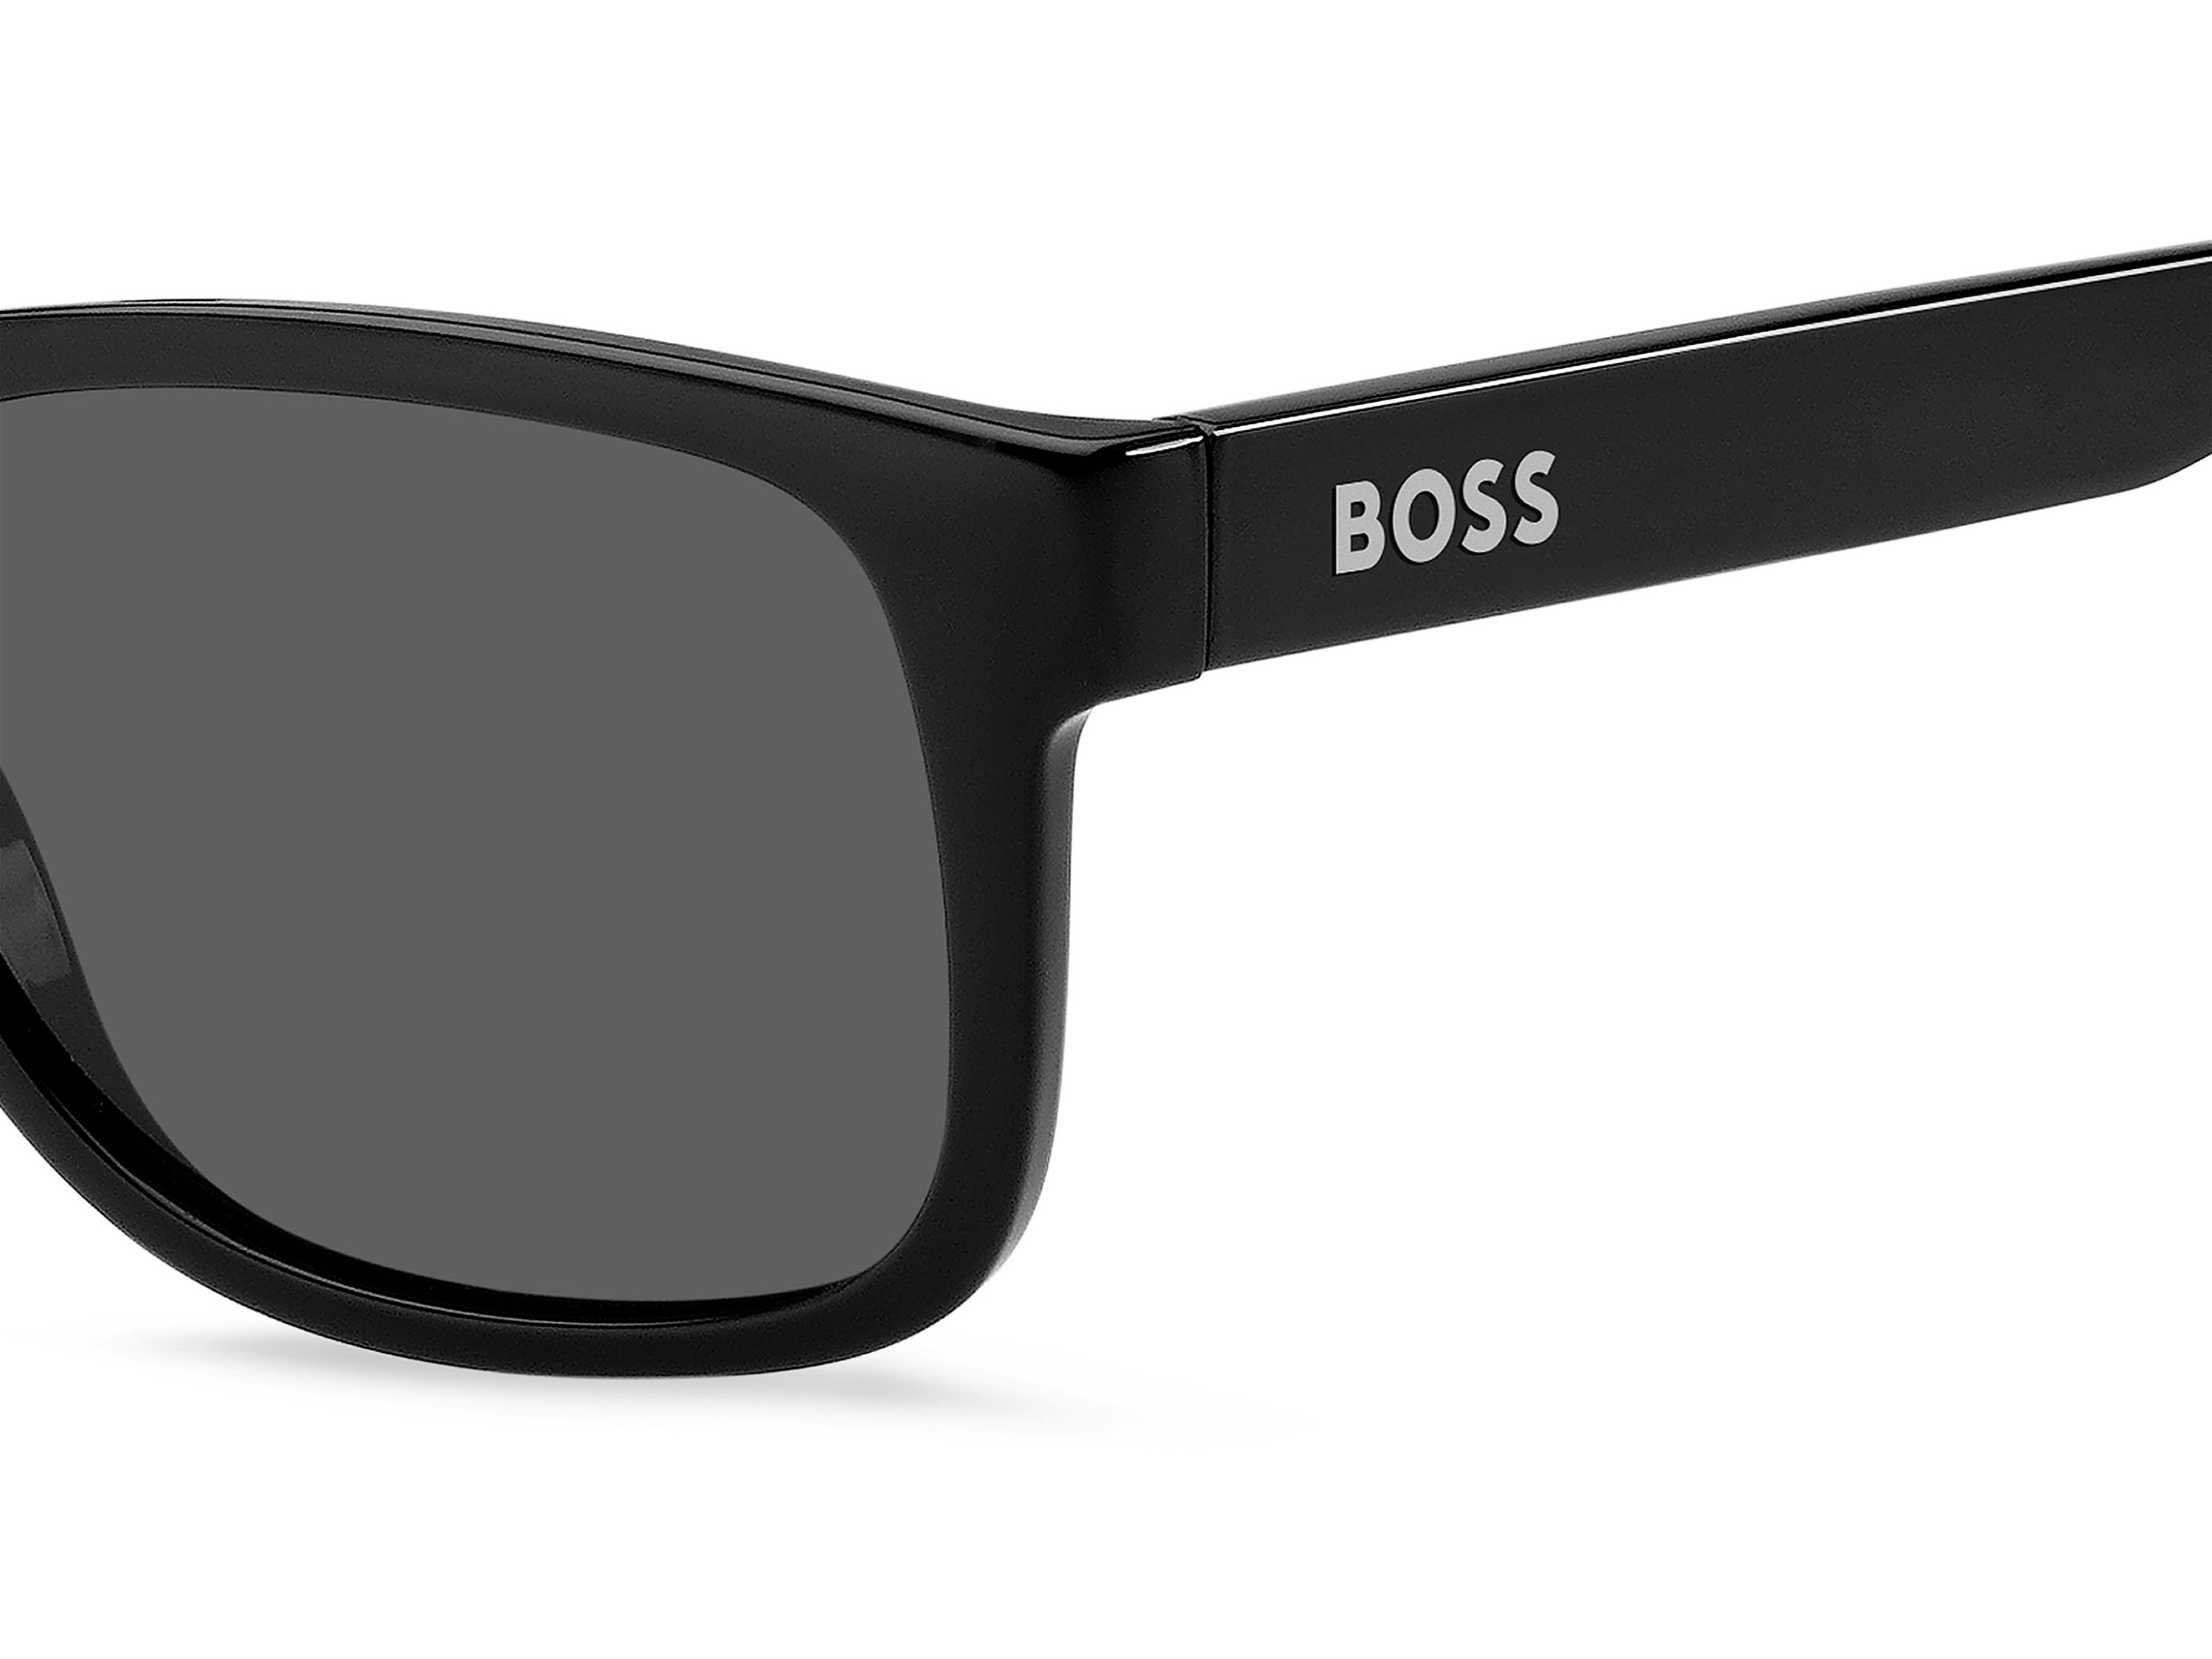 Boss Sonnenbrille 1568/S 807 schwarz